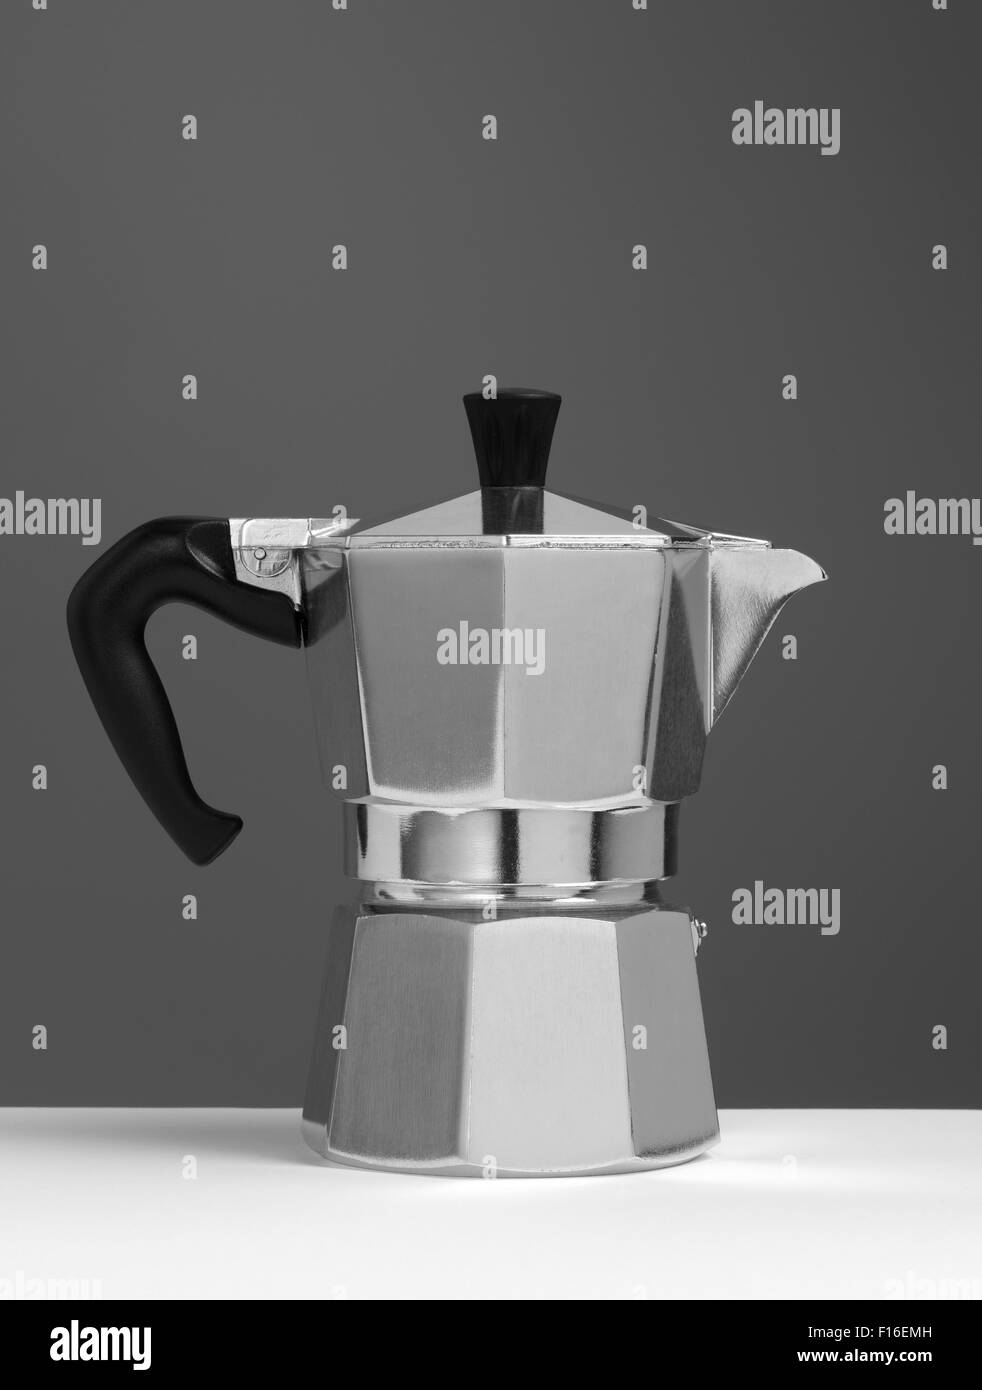 https://c8.alamy.com/comp/F16EMH/italian-coffee-machine-F16EMH.jpg